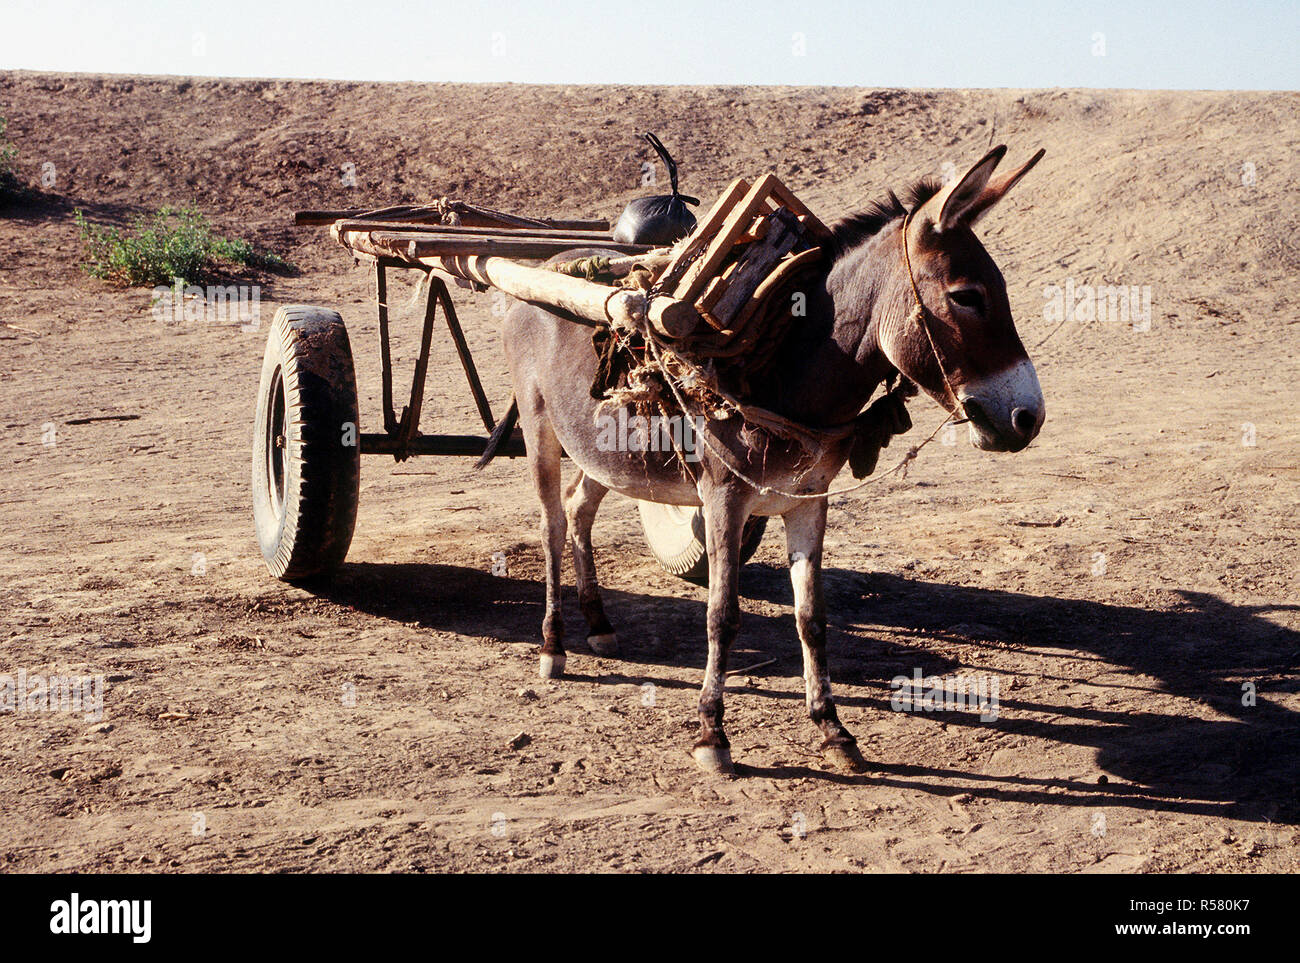 1993 - una carreta de burro en la aldea cerca de Belet Weyne, Somalia. Foto de stock